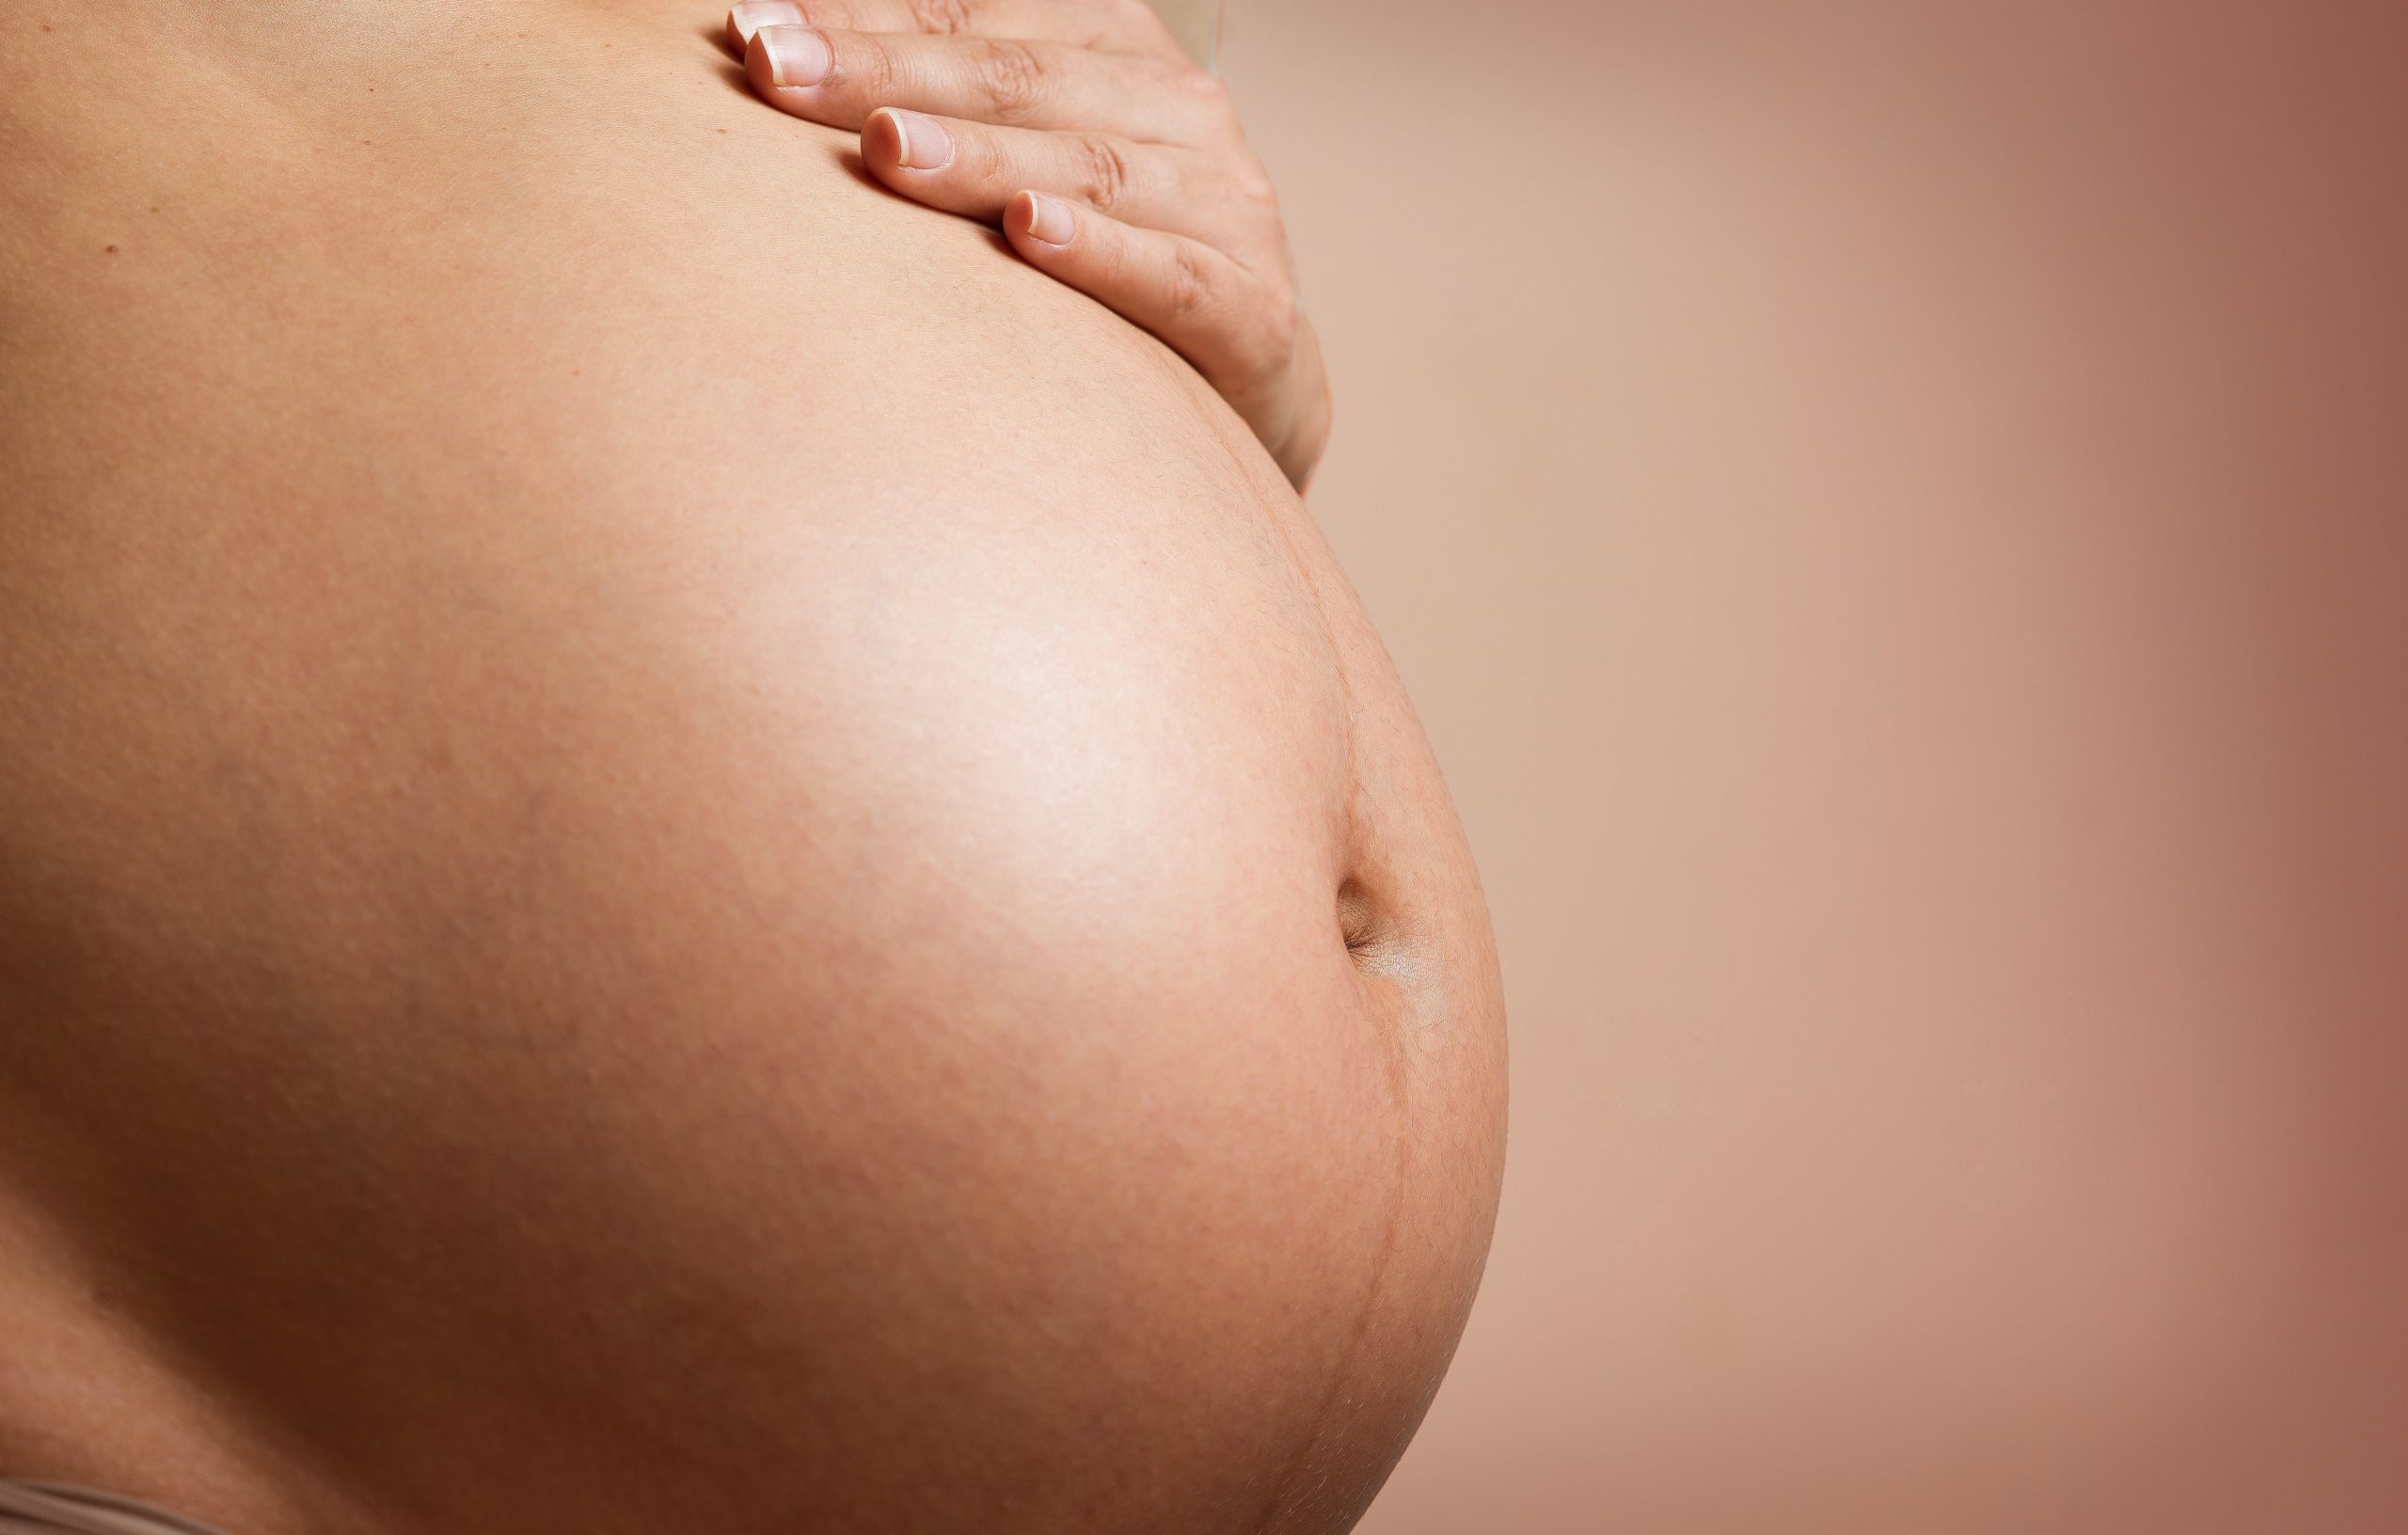 Featured image for “E-Learning – Le suivi de grossesse”